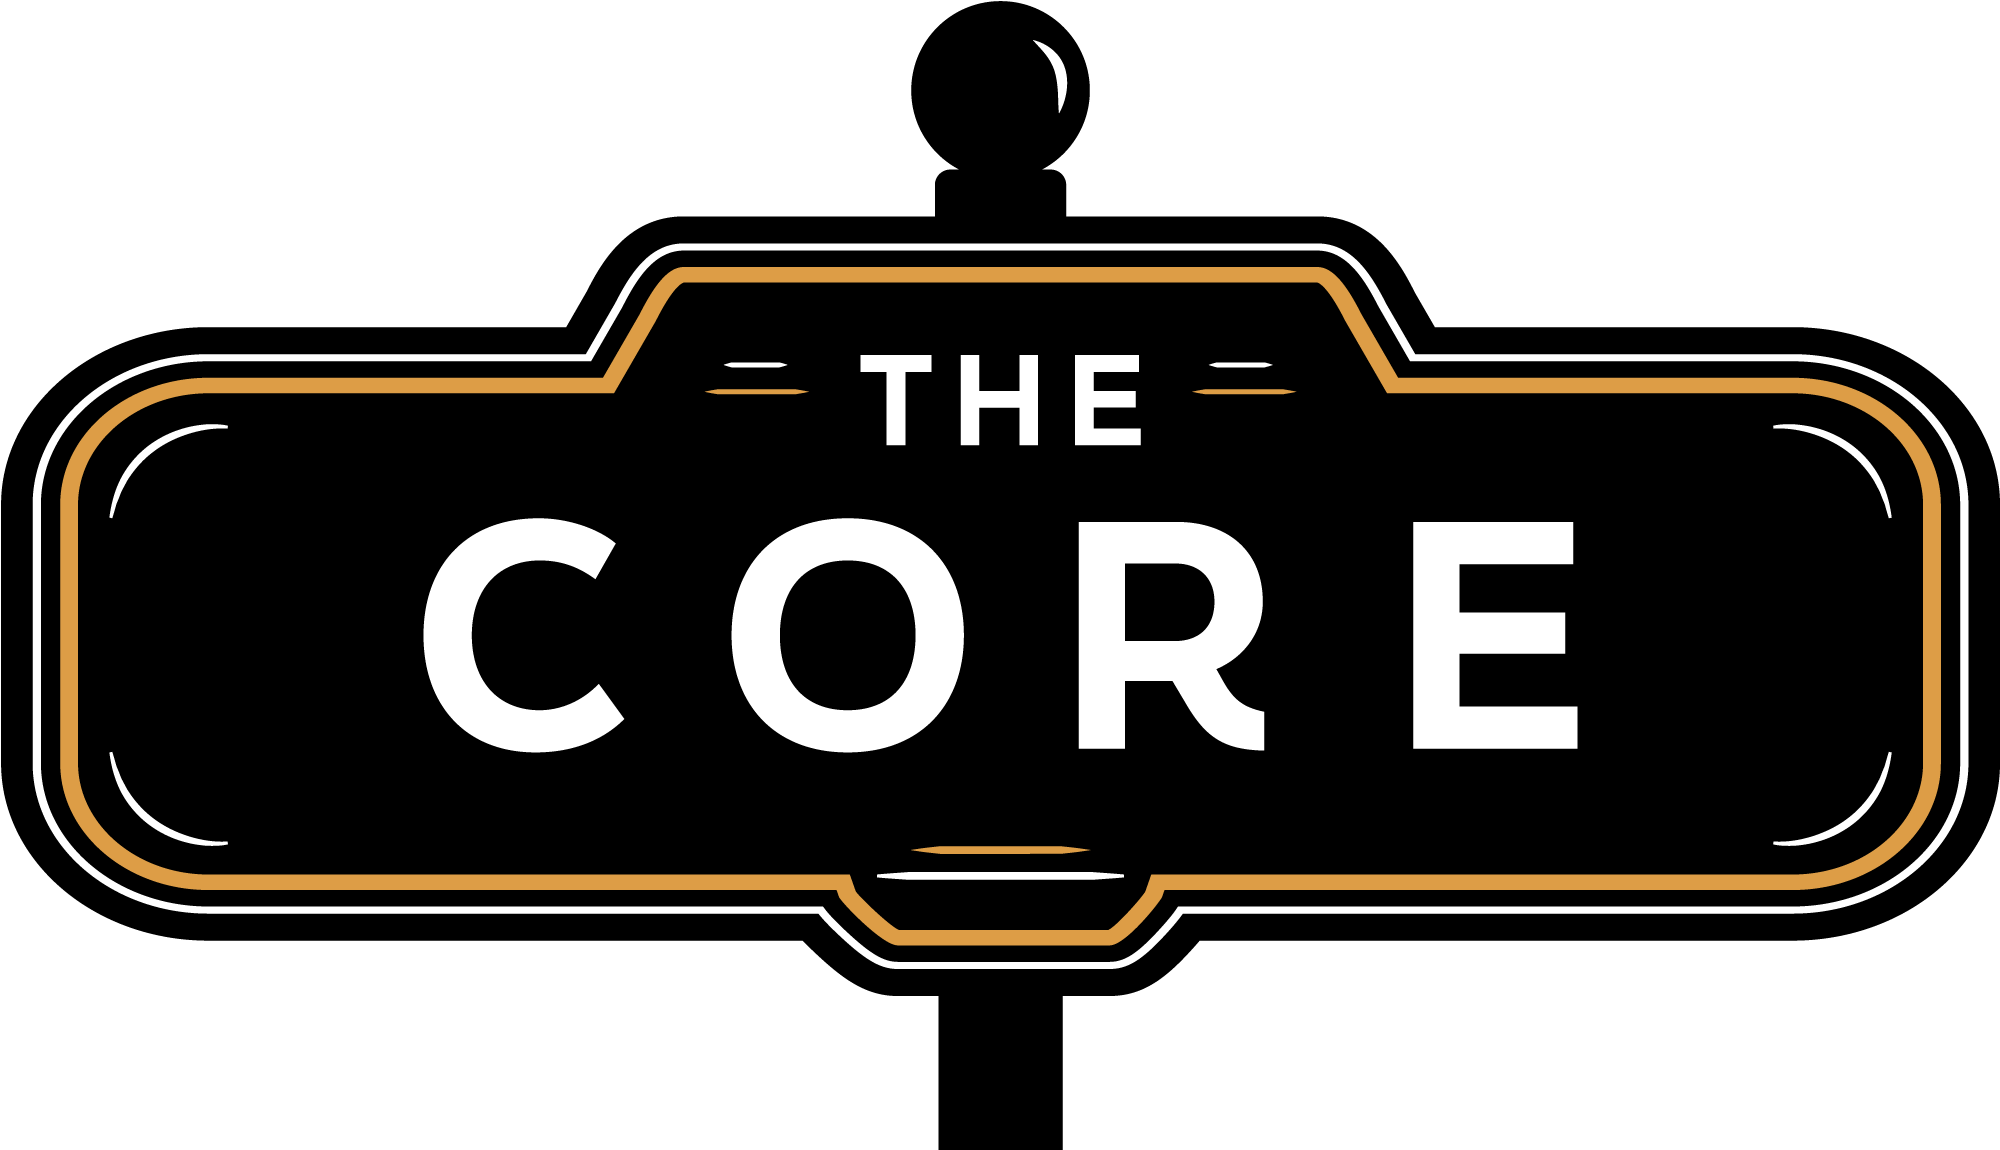 The core